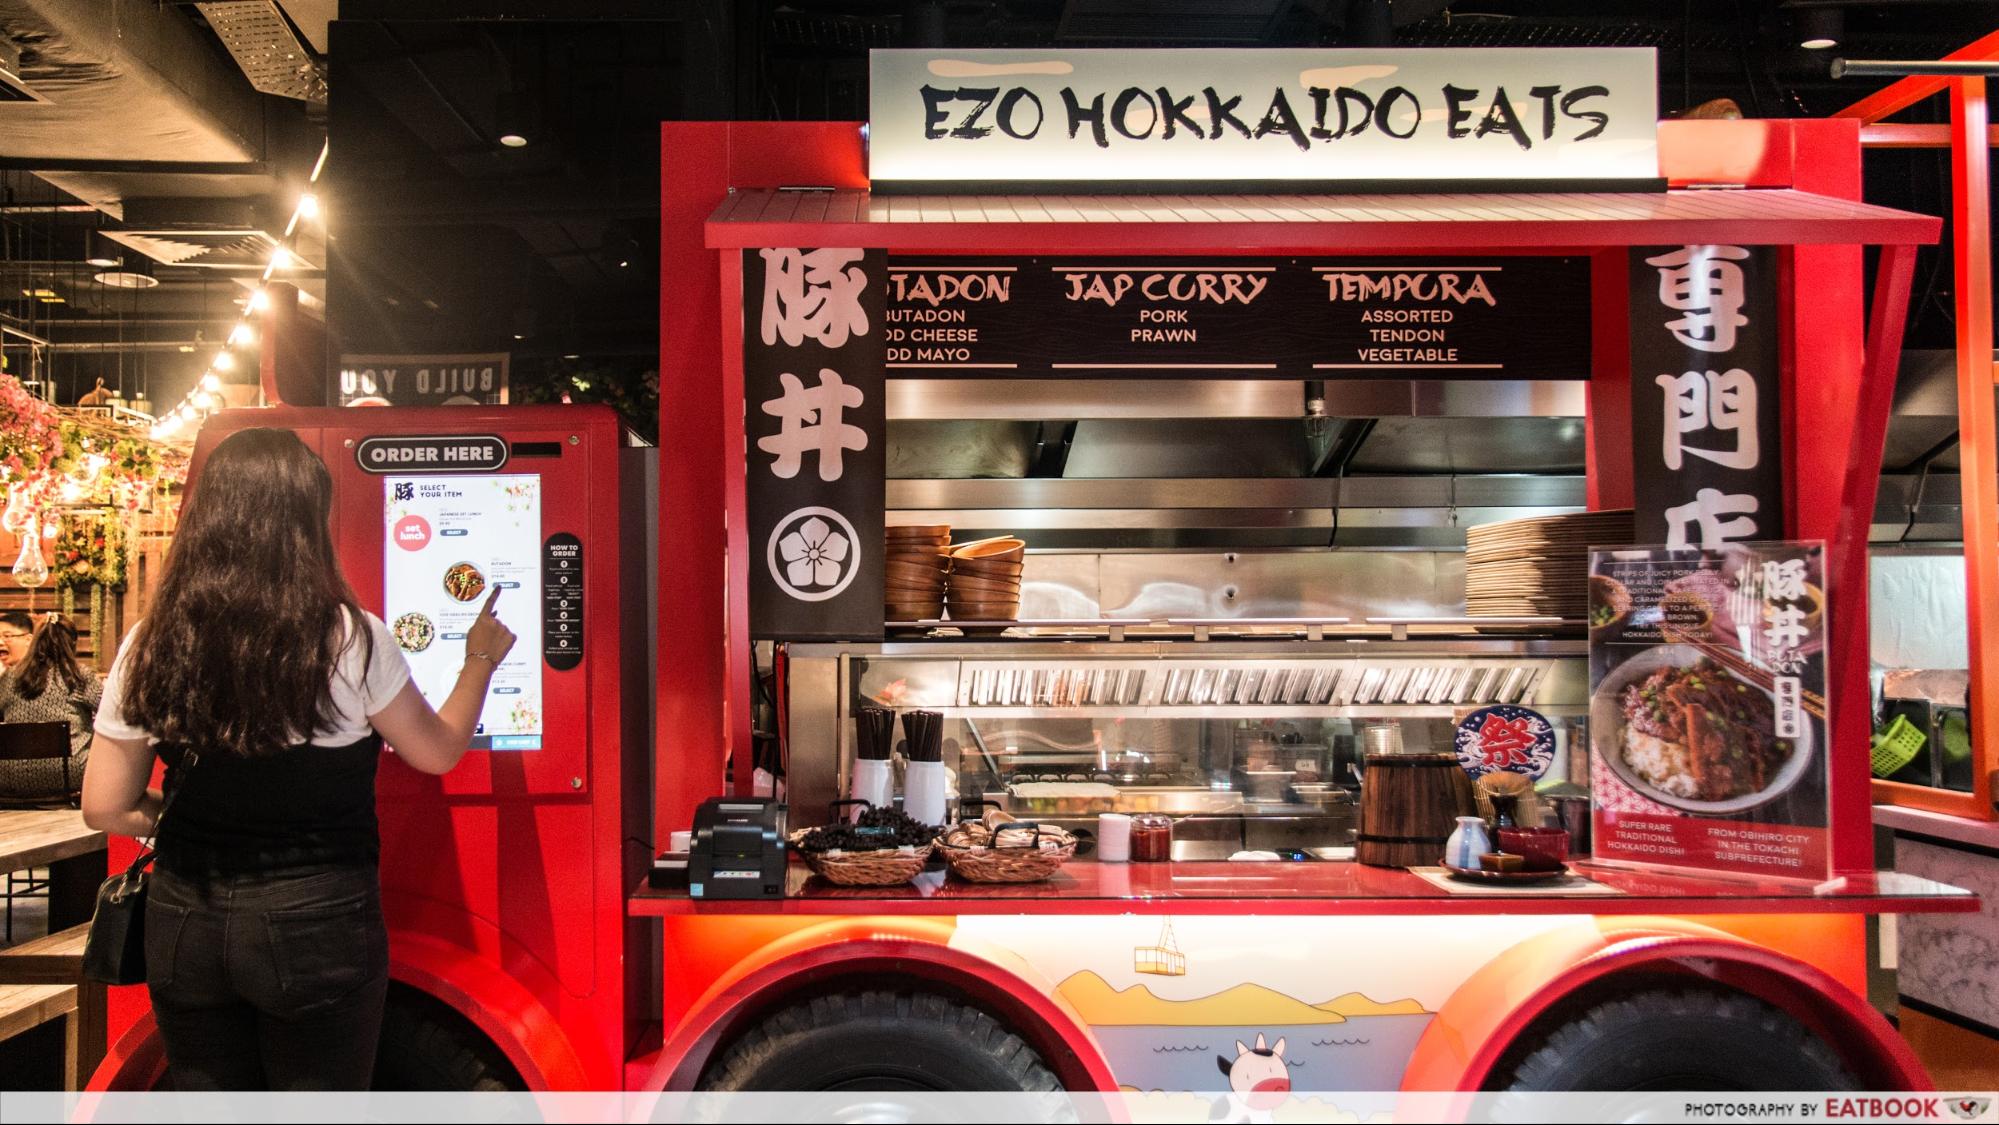 Ezo-Hokkaido Eats - machine